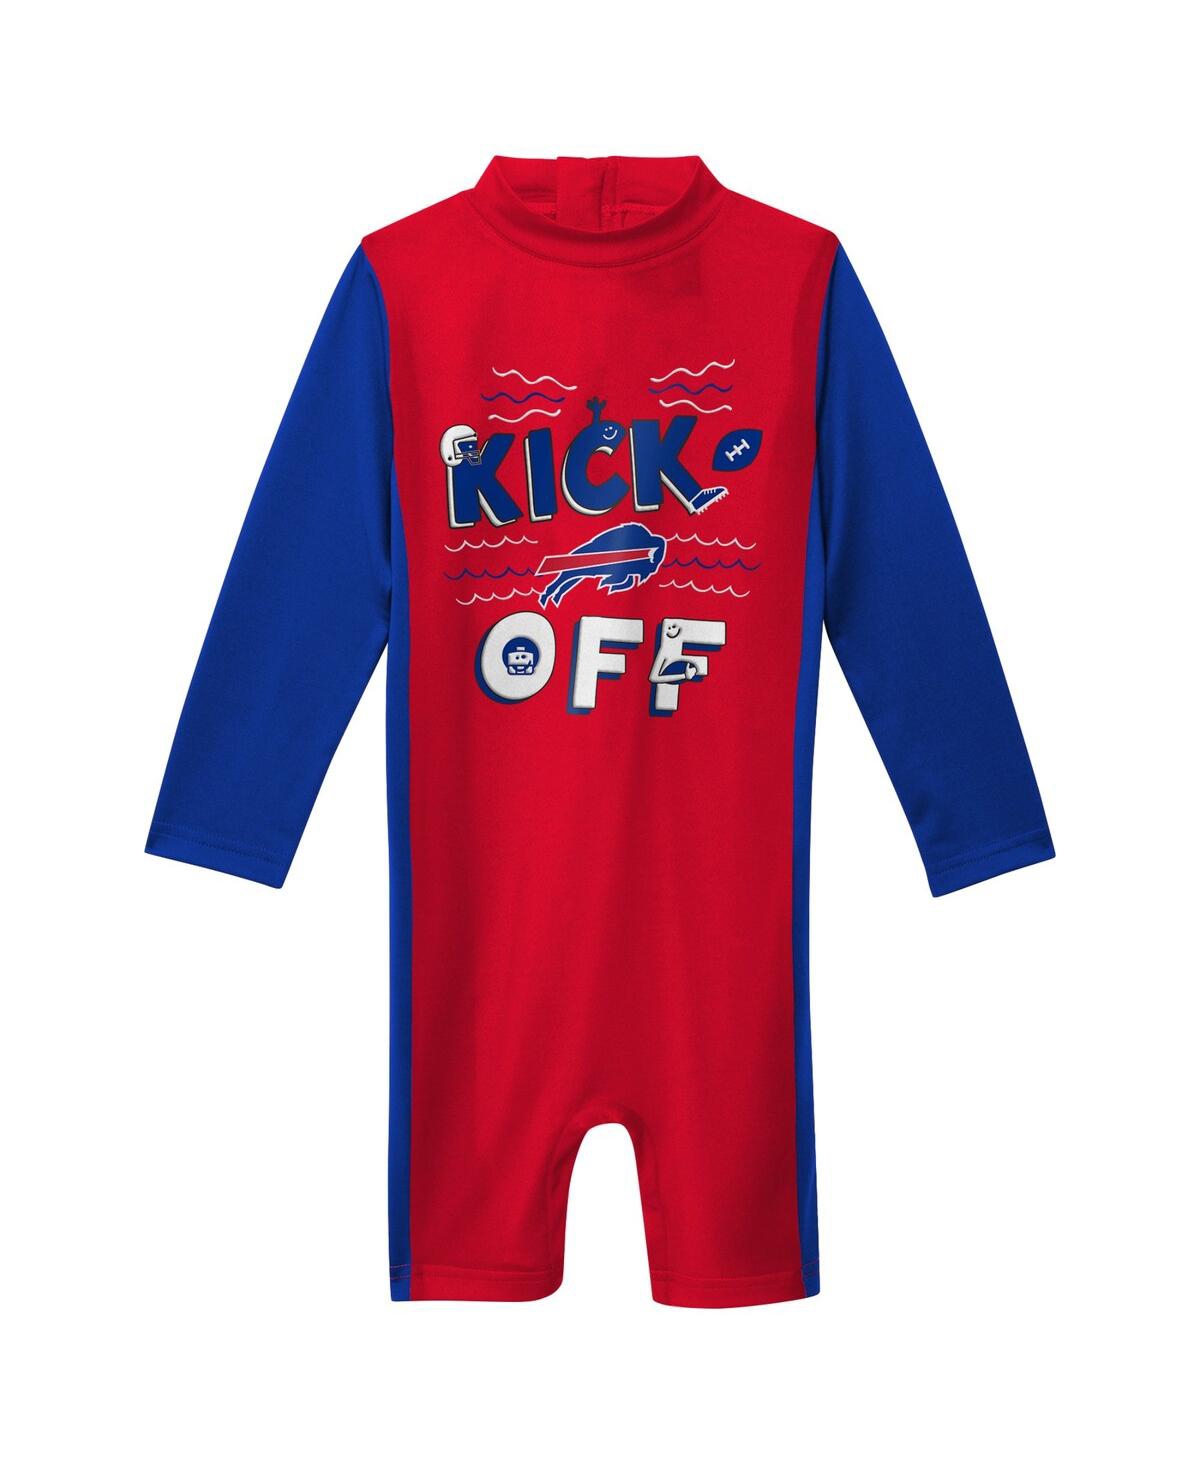 Outerstuff Babies' Toddler Boys And Girls Red Buffalo Bills Wave Runner Long Sleeve Wetsuit